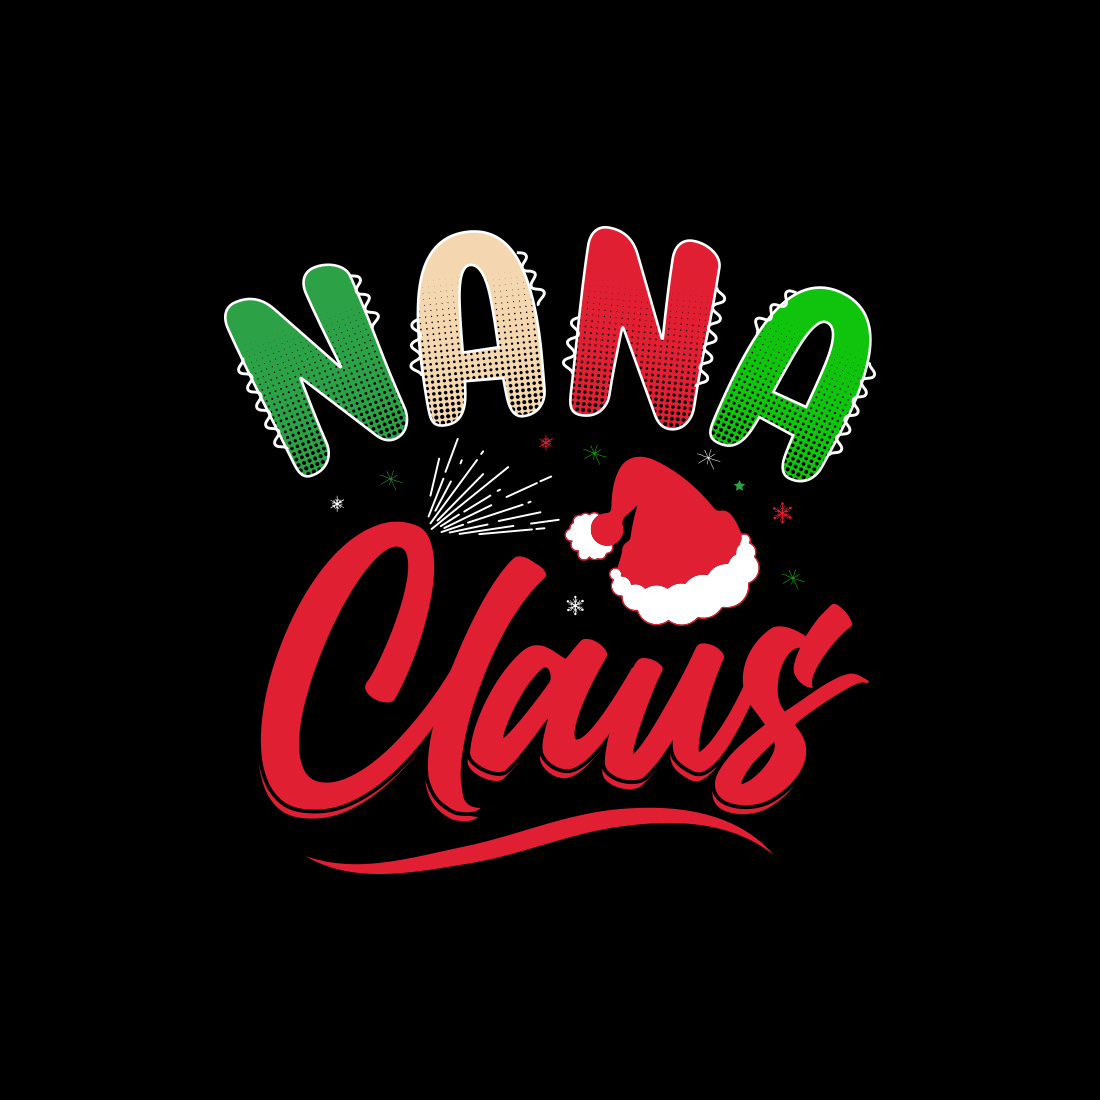 Nana claus T-shirt design preview image.